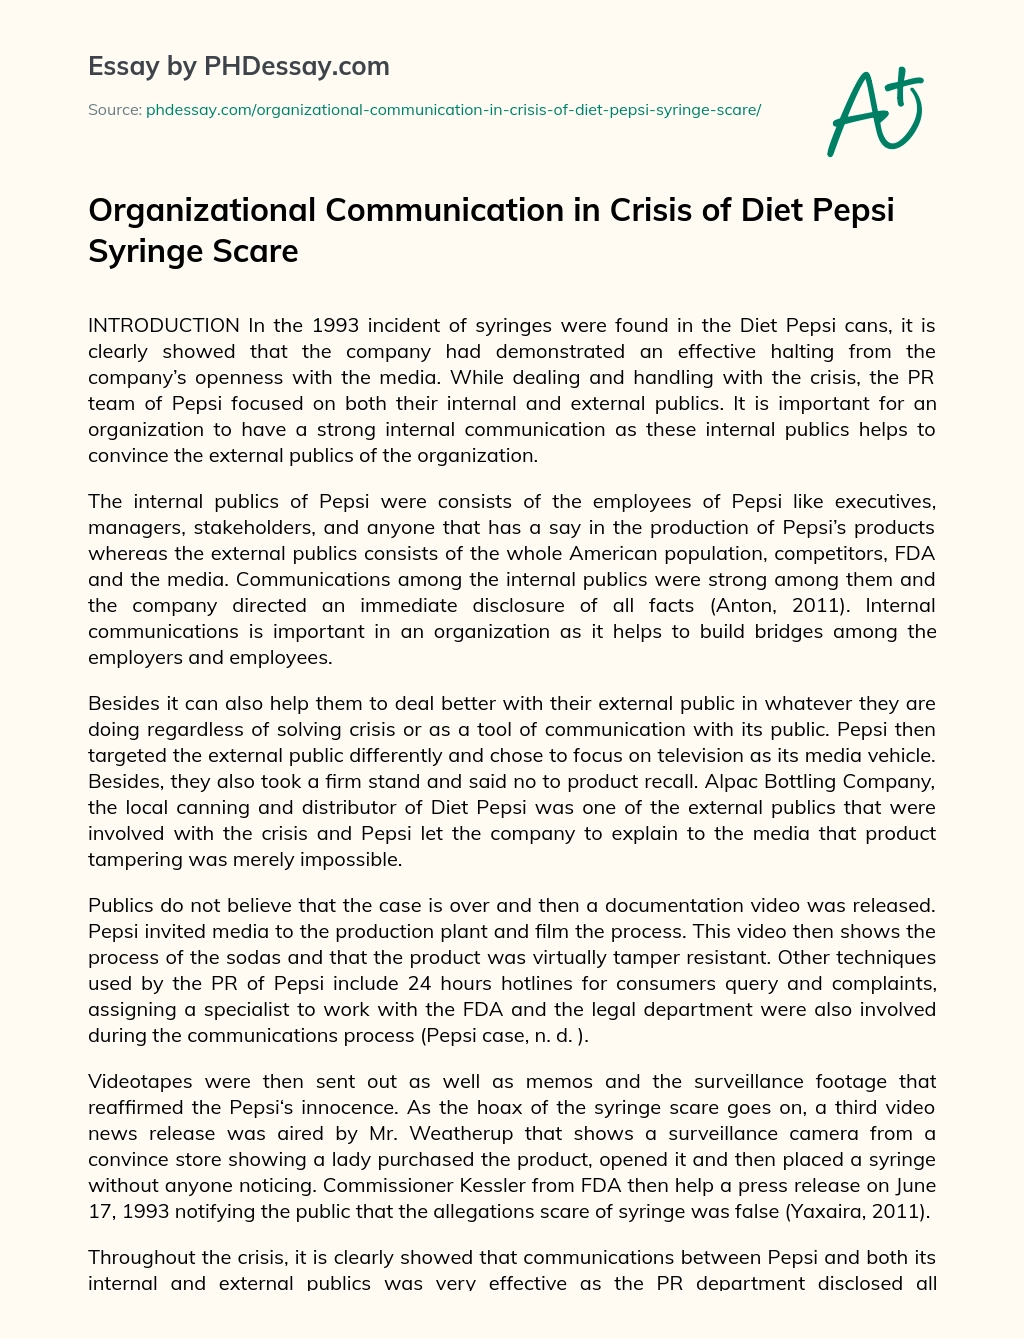 Organizational Communication in Crisis of Diet Pepsi Syringe Scare essay